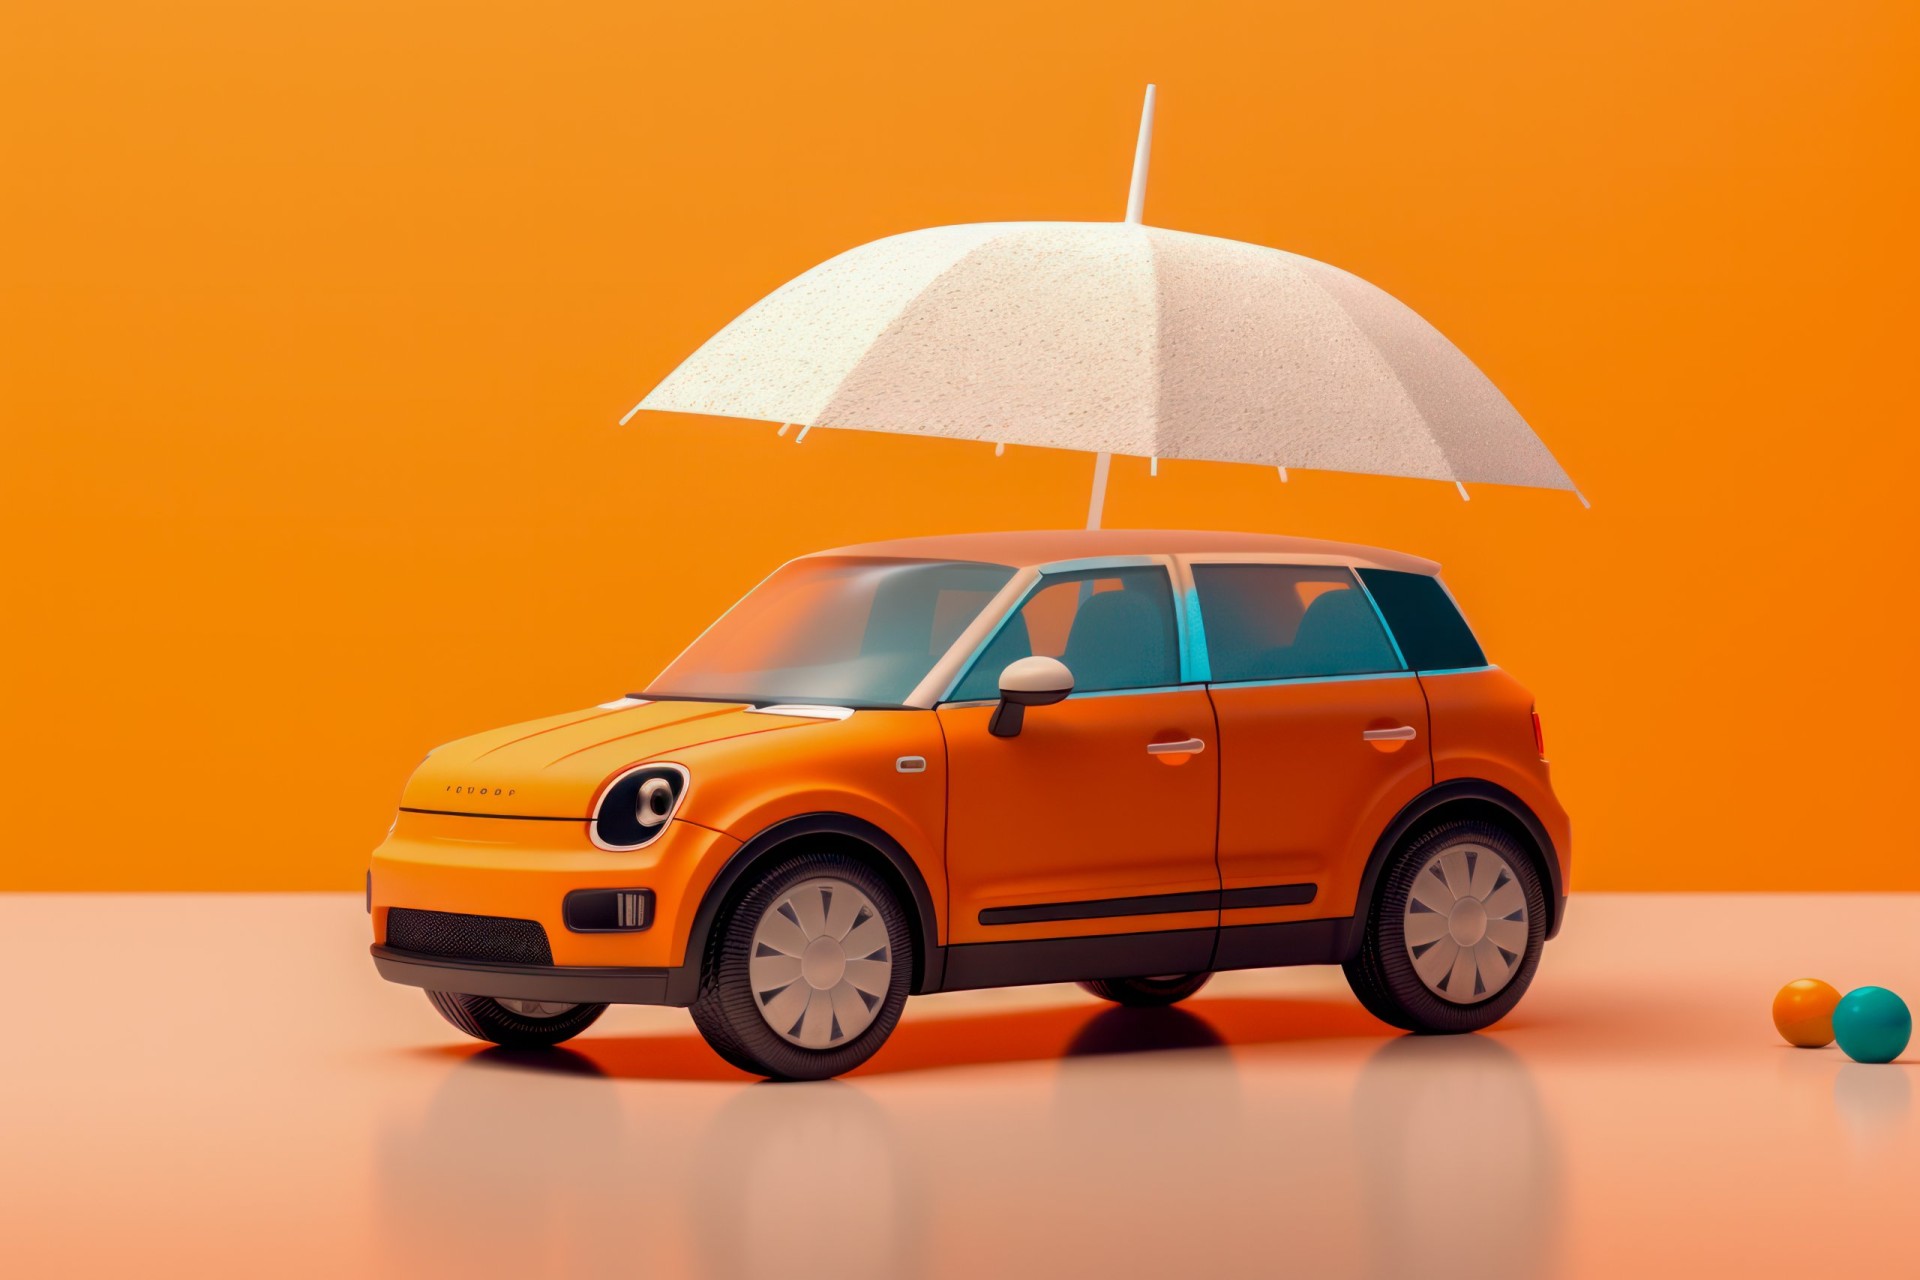 Orange car under an umbrella